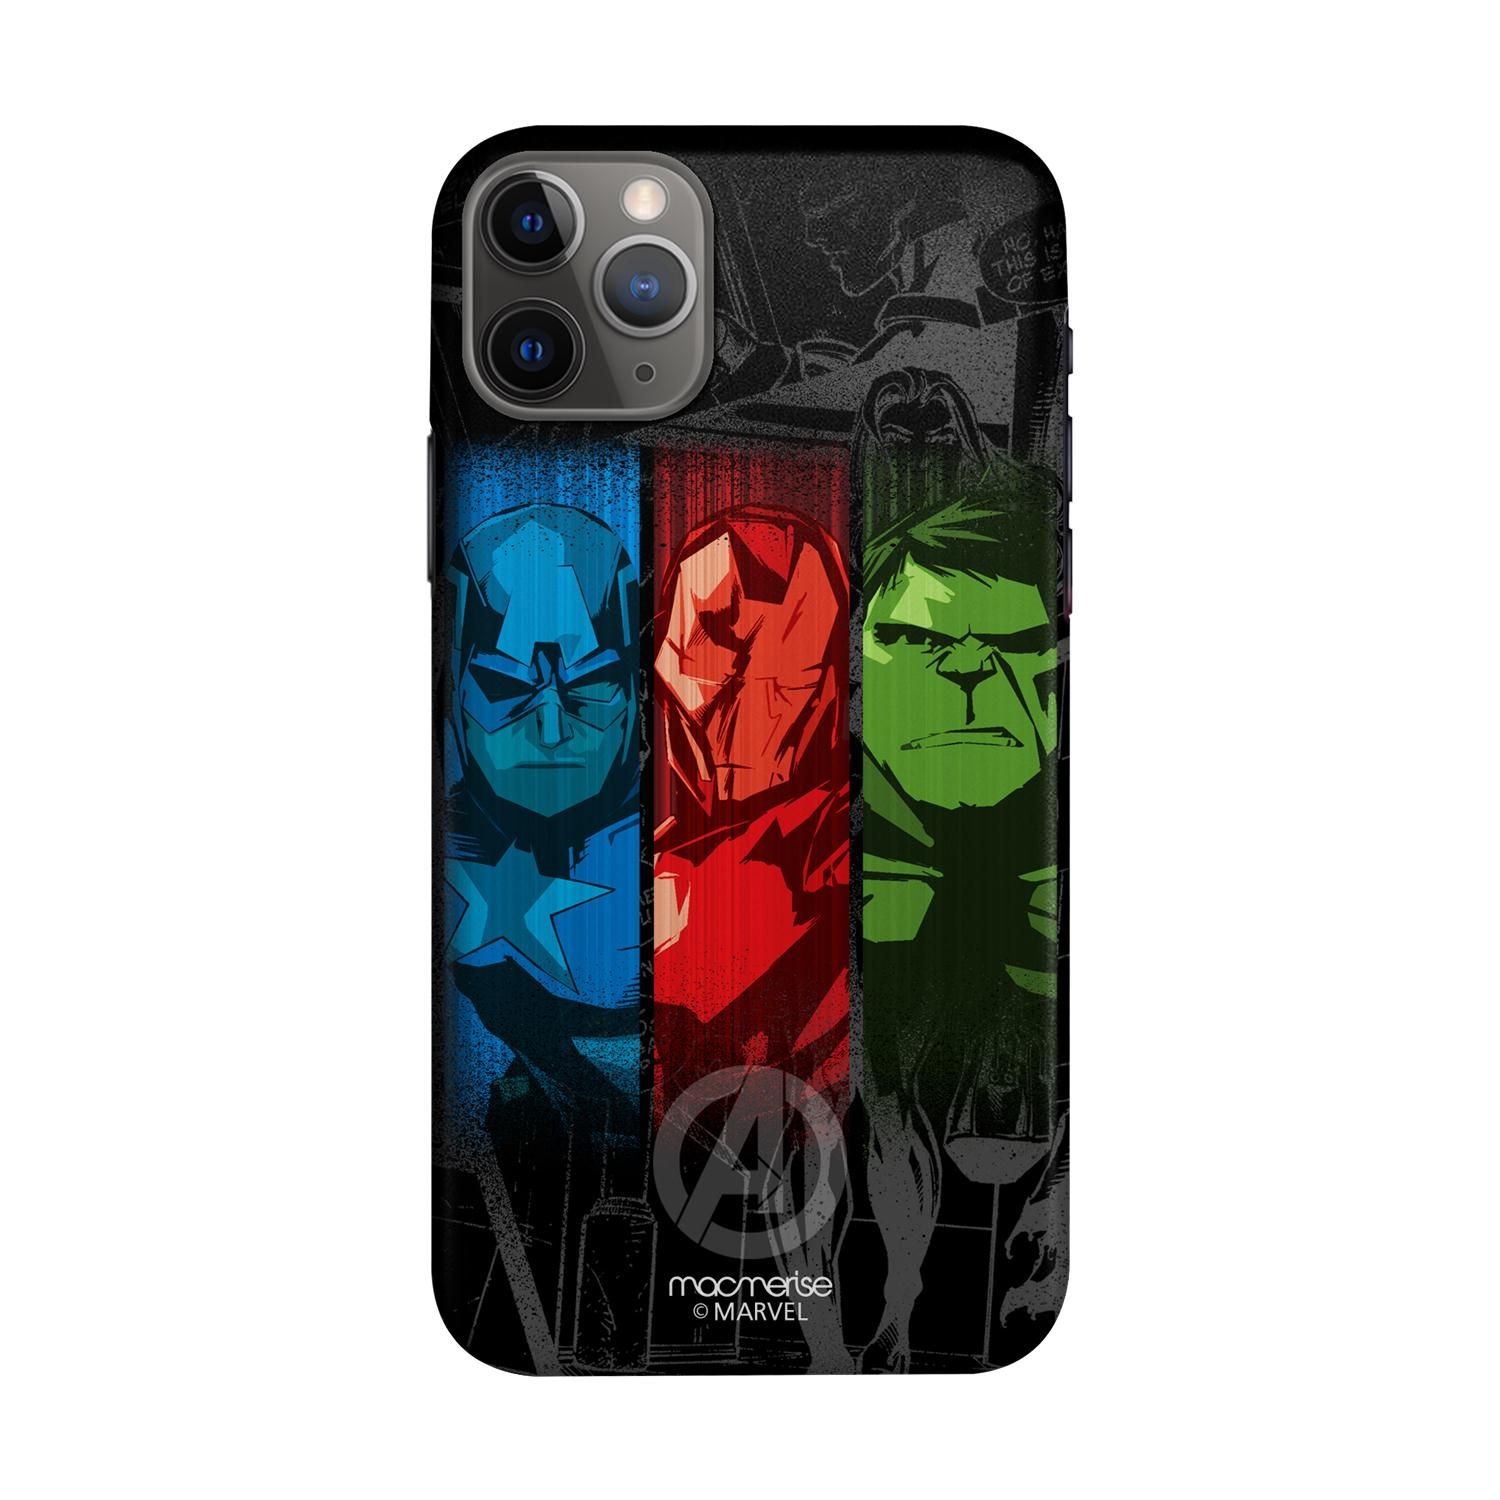 Buy Avengers Sketch - Sleek Phone Case for iPhone 11 Pro Online